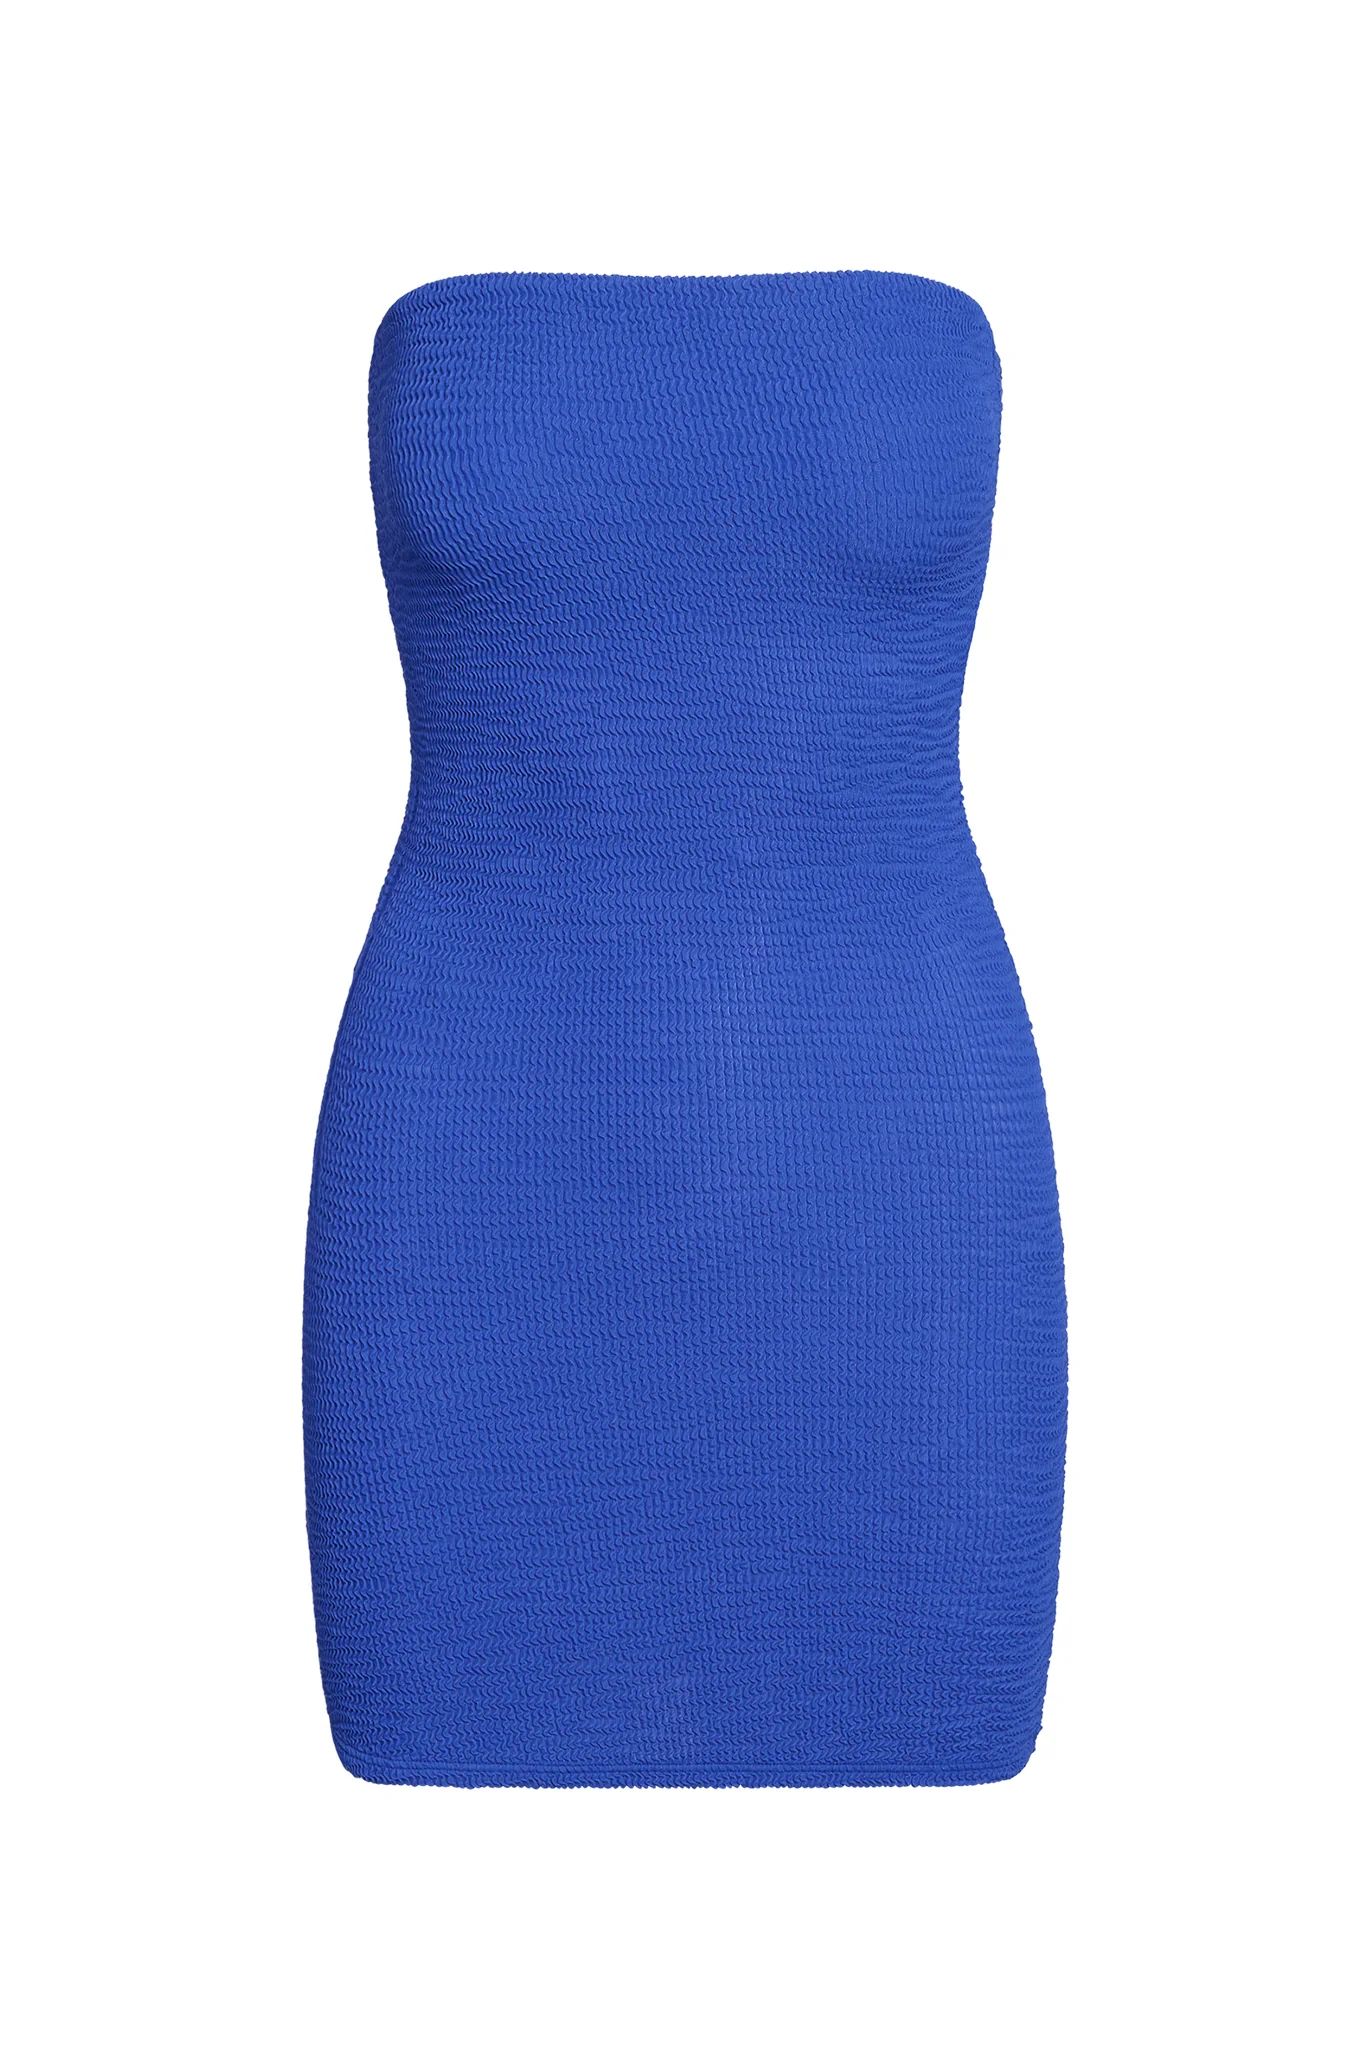 Bimini Dress - Cobalt Crinkle | Monday Swimwear